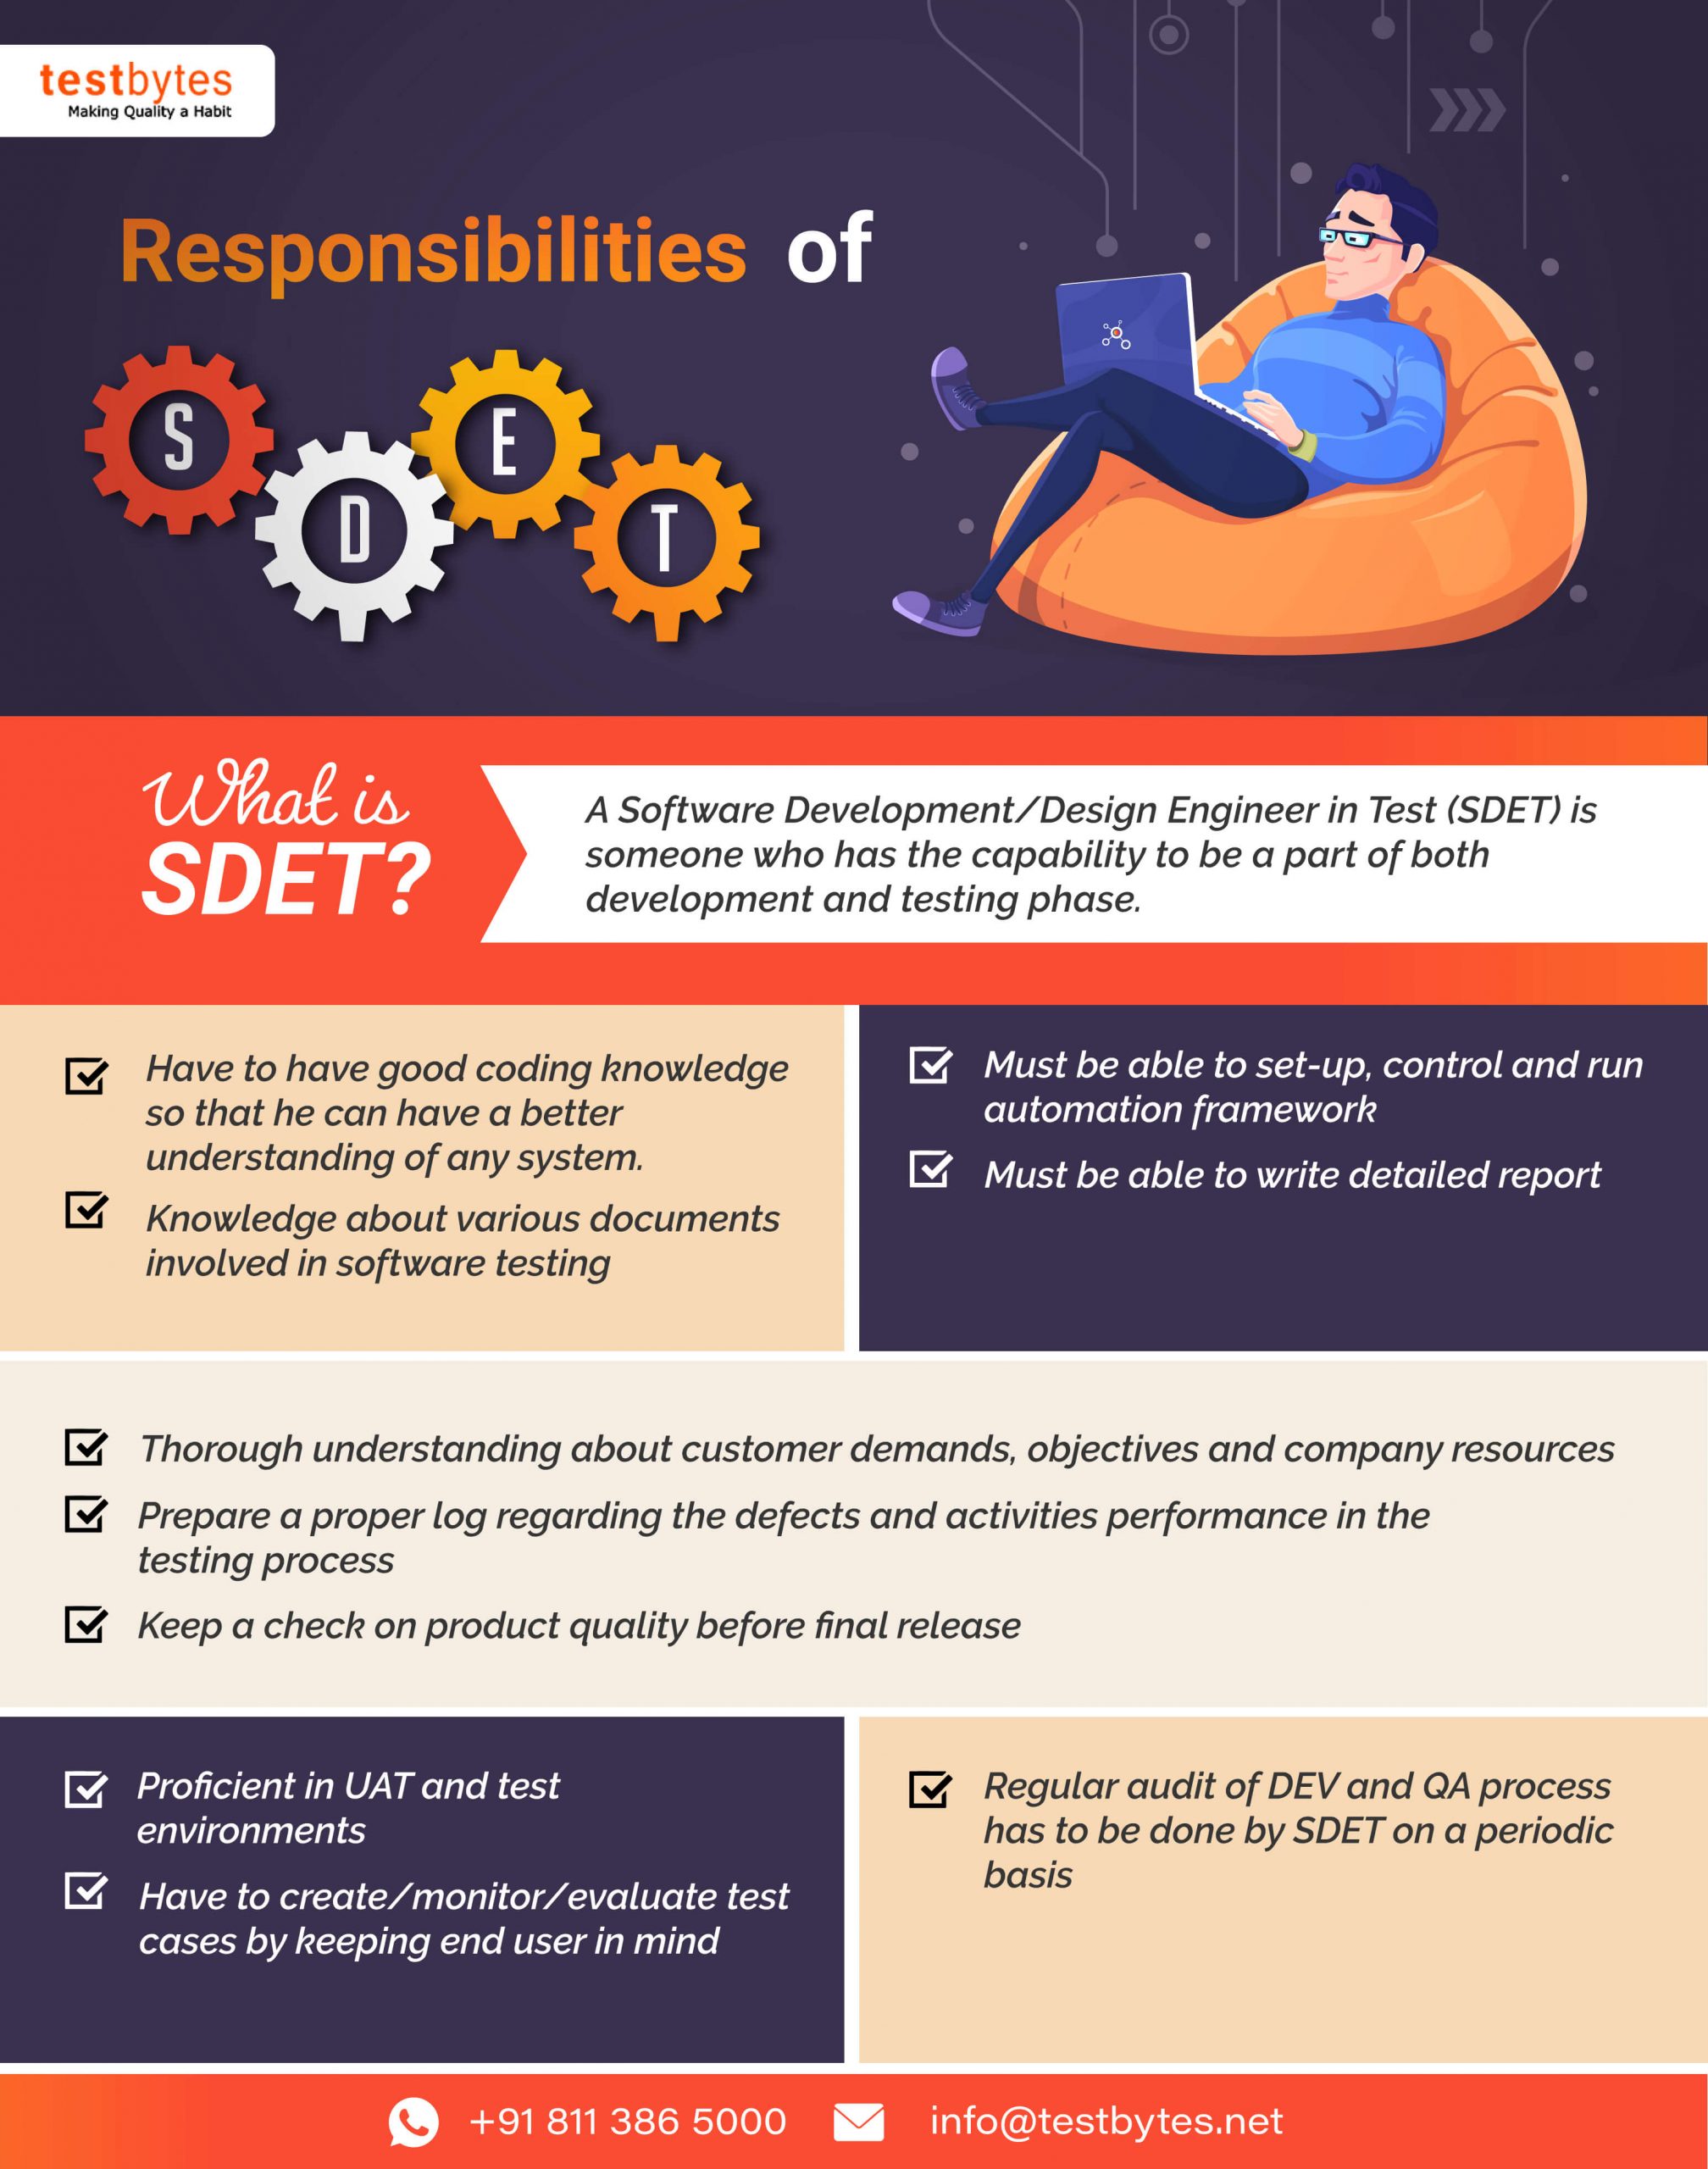 Responsibilities of SDET